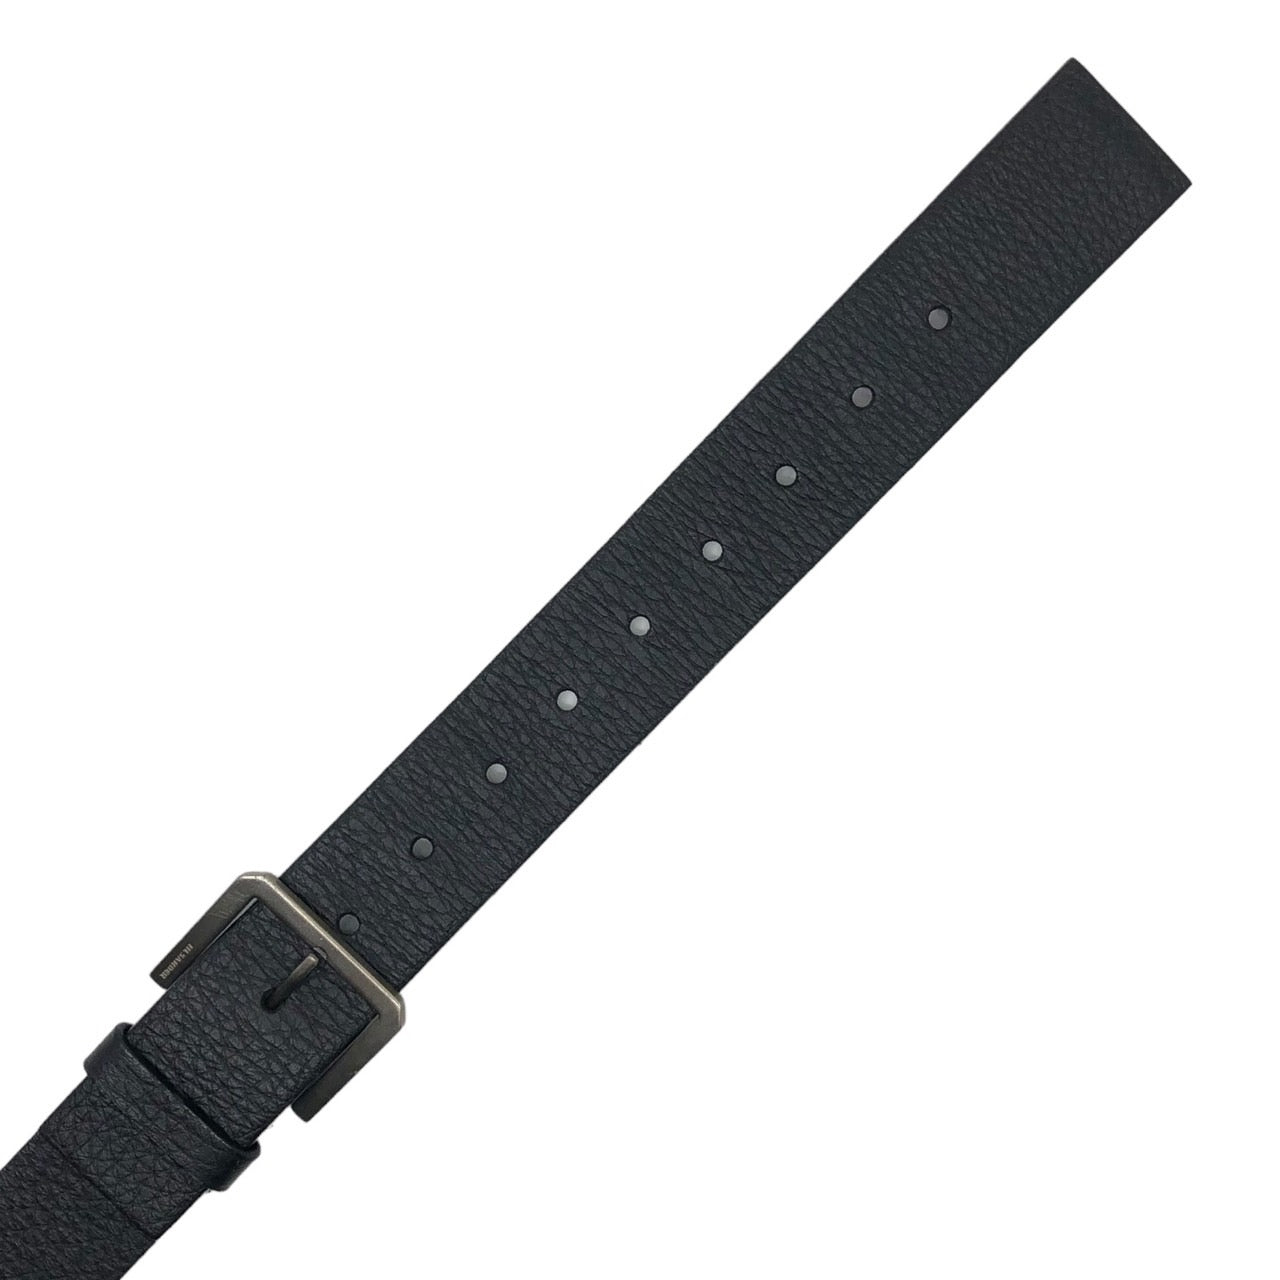 JIL SANDER(ジルサンダー) double buckle leather belt ダブル バックル レザー ベルト 36/90 ブラック